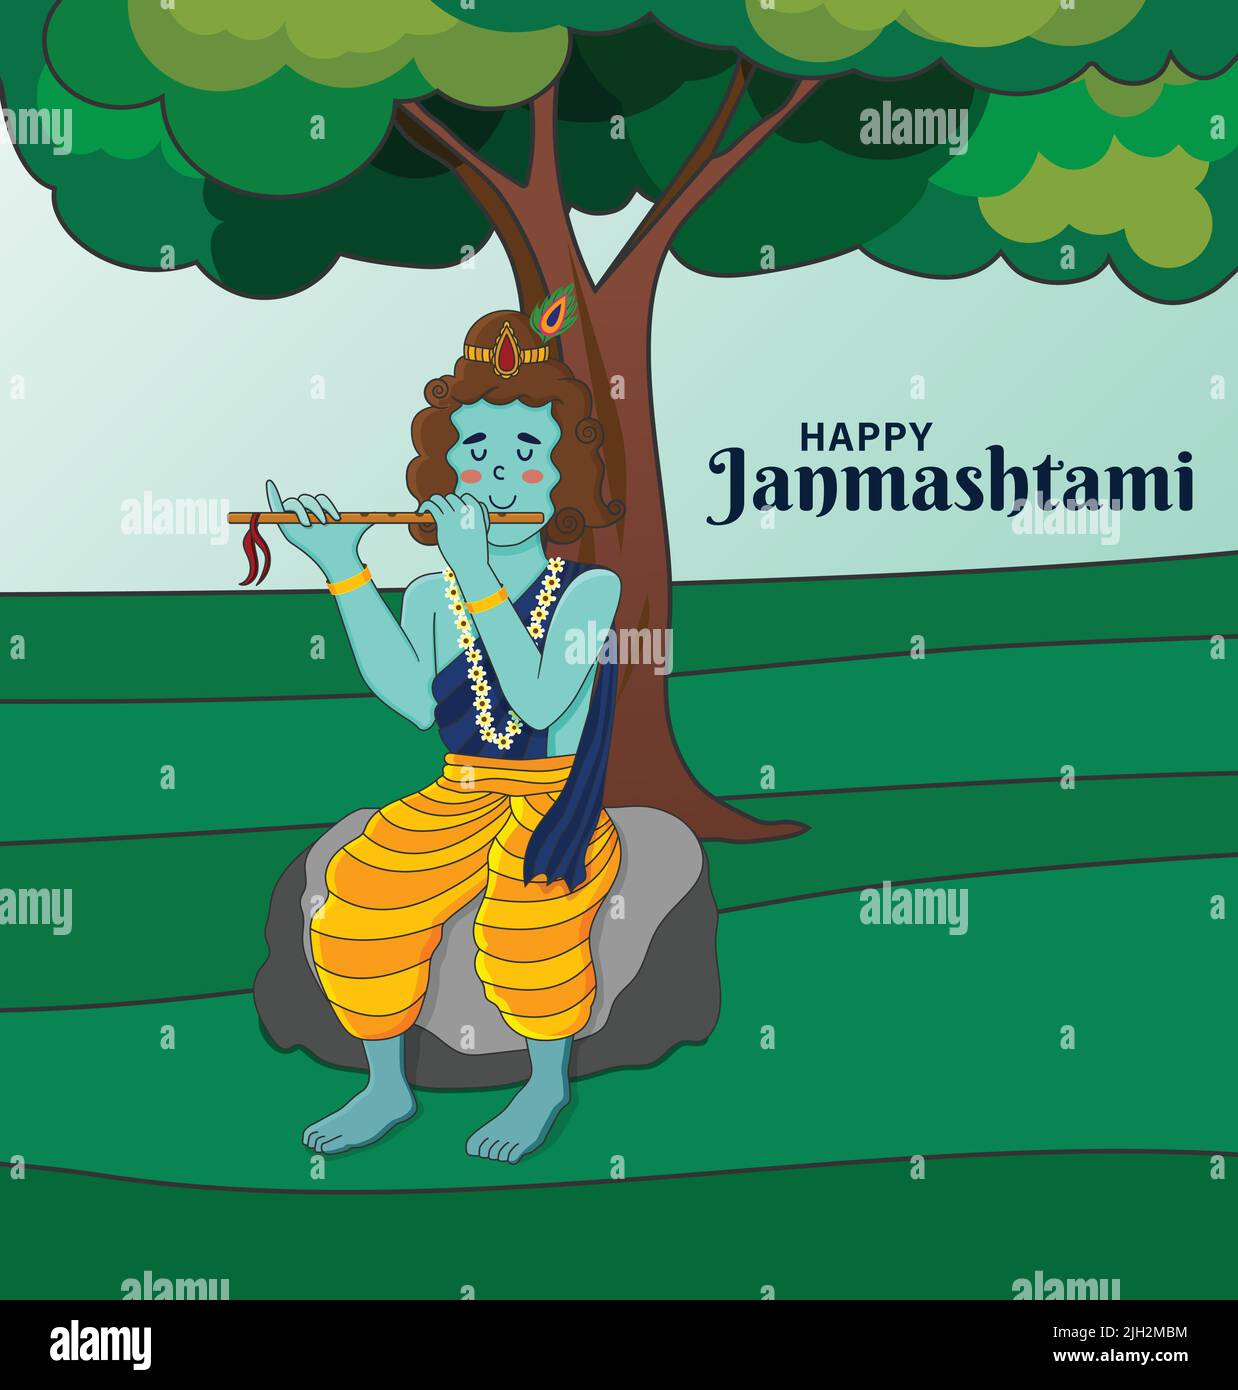 Krishna Janmashtami Cute Festival Poster. Lord Krishna playing flute in evening under a tree. Greeting card, banner, social media post flat vector art Stock Vector